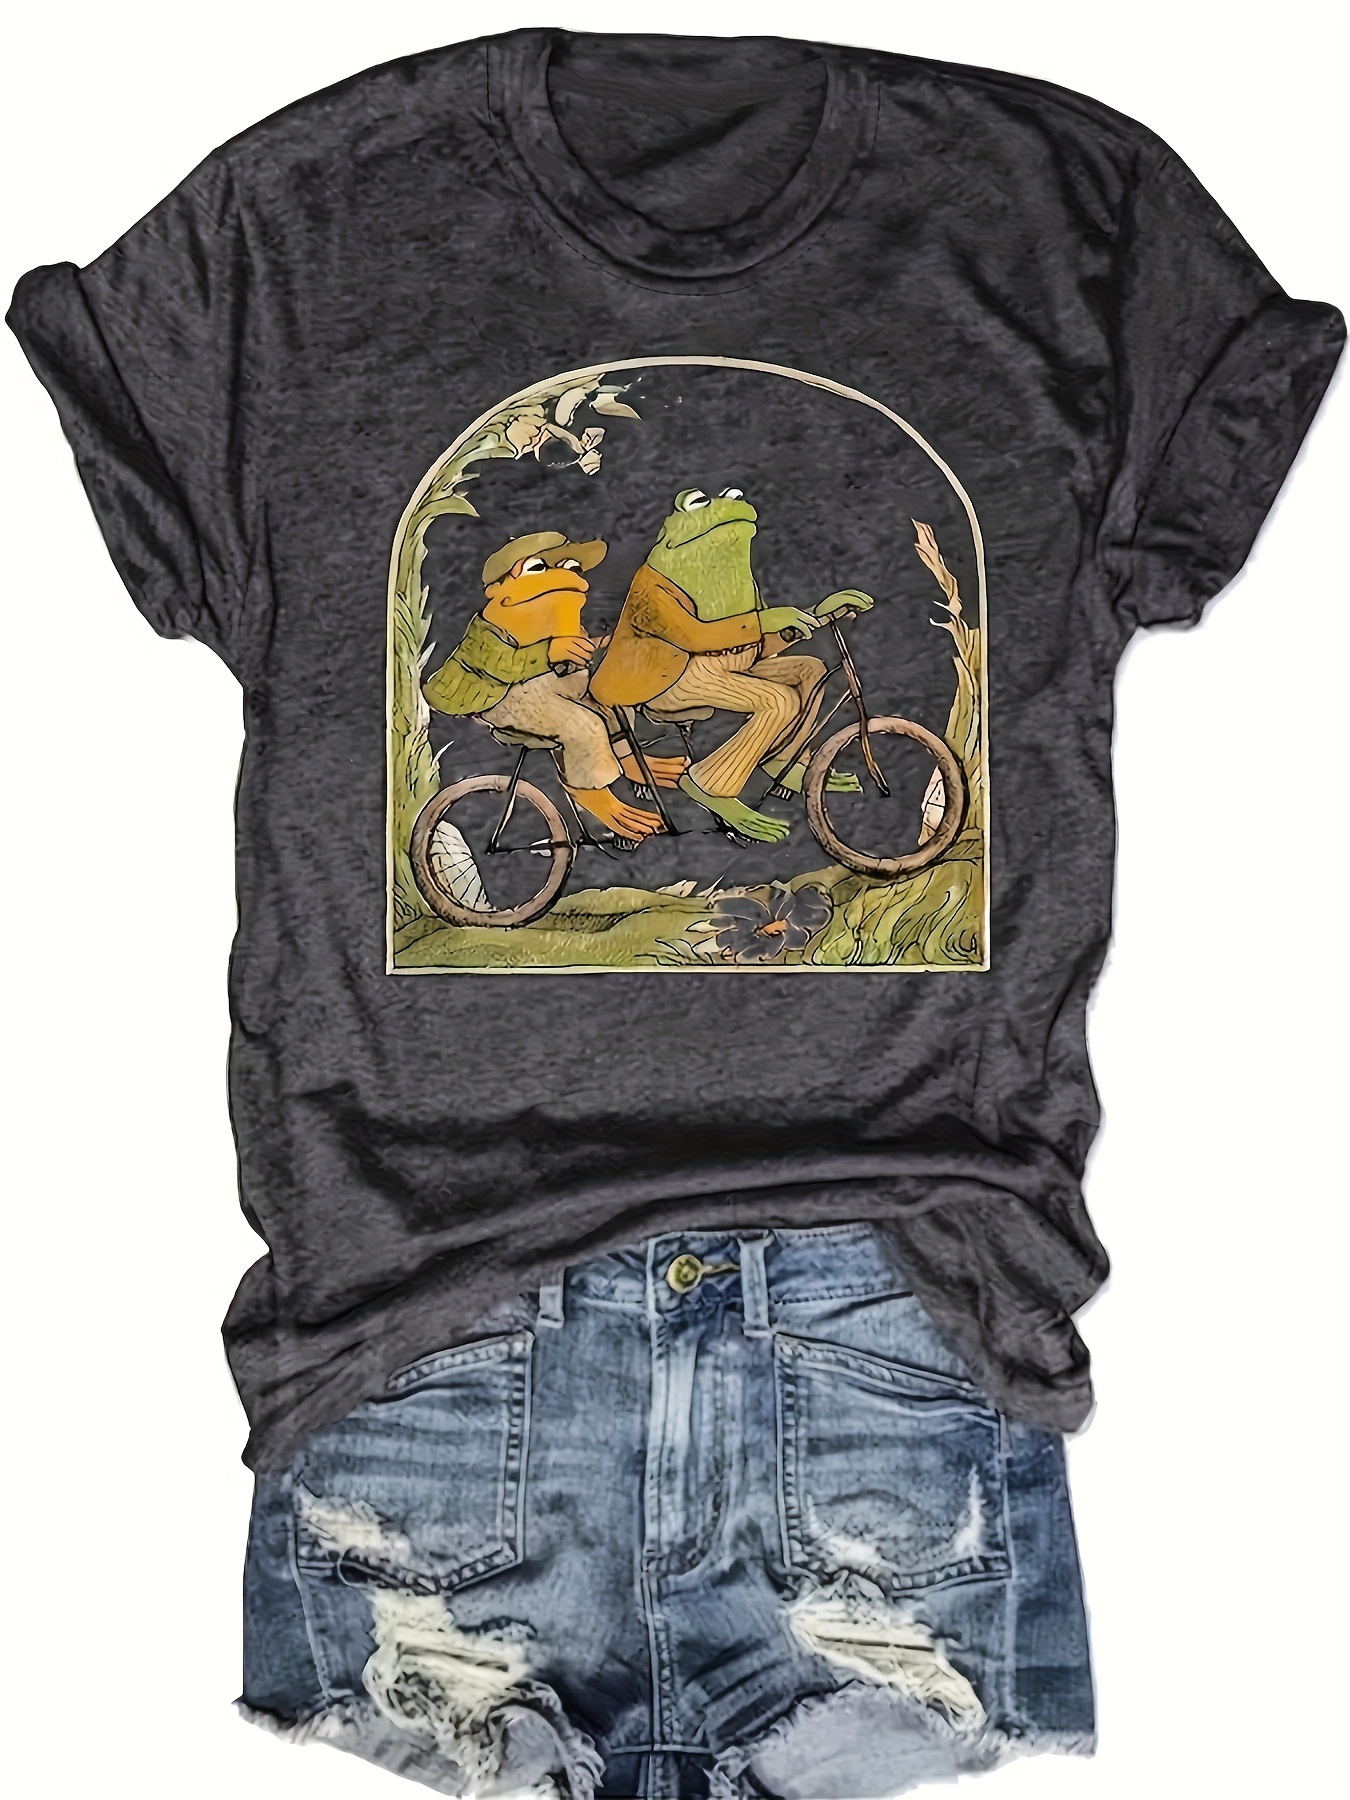 Plus Size Frog Print T-Shirt, Casual Crew Neck Short Sleeve T-Shirt, Women's Plus Size Clothing